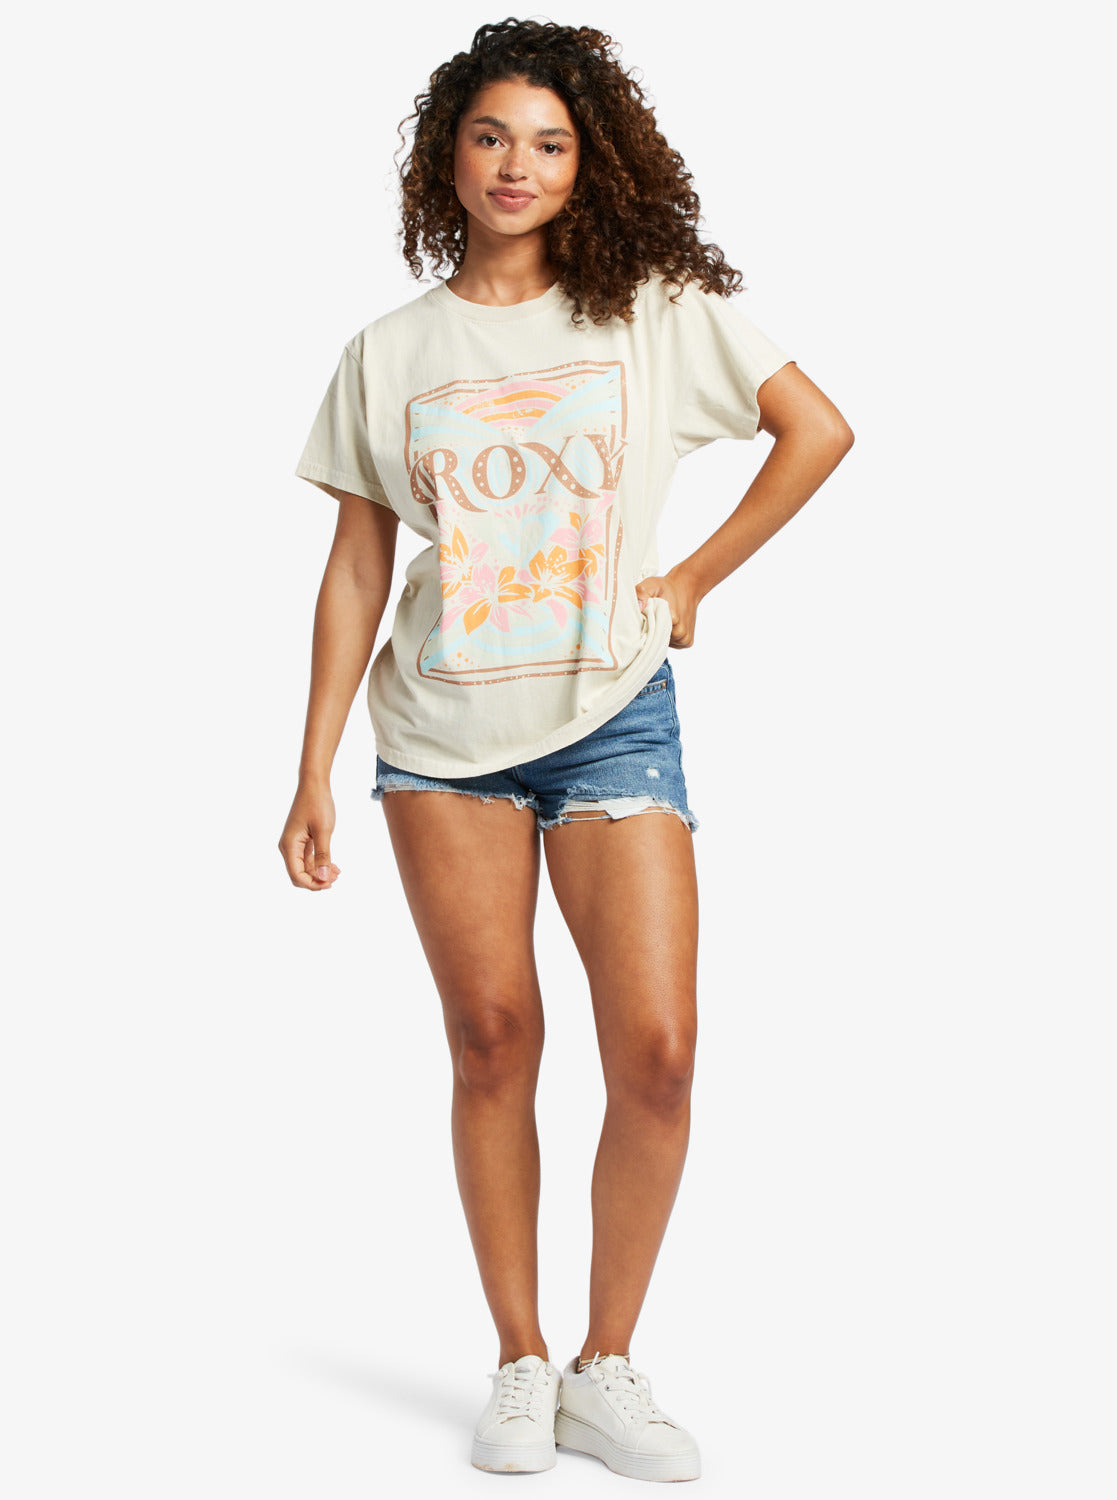 Roxy Rays Oversized Shirt - 88 Gear